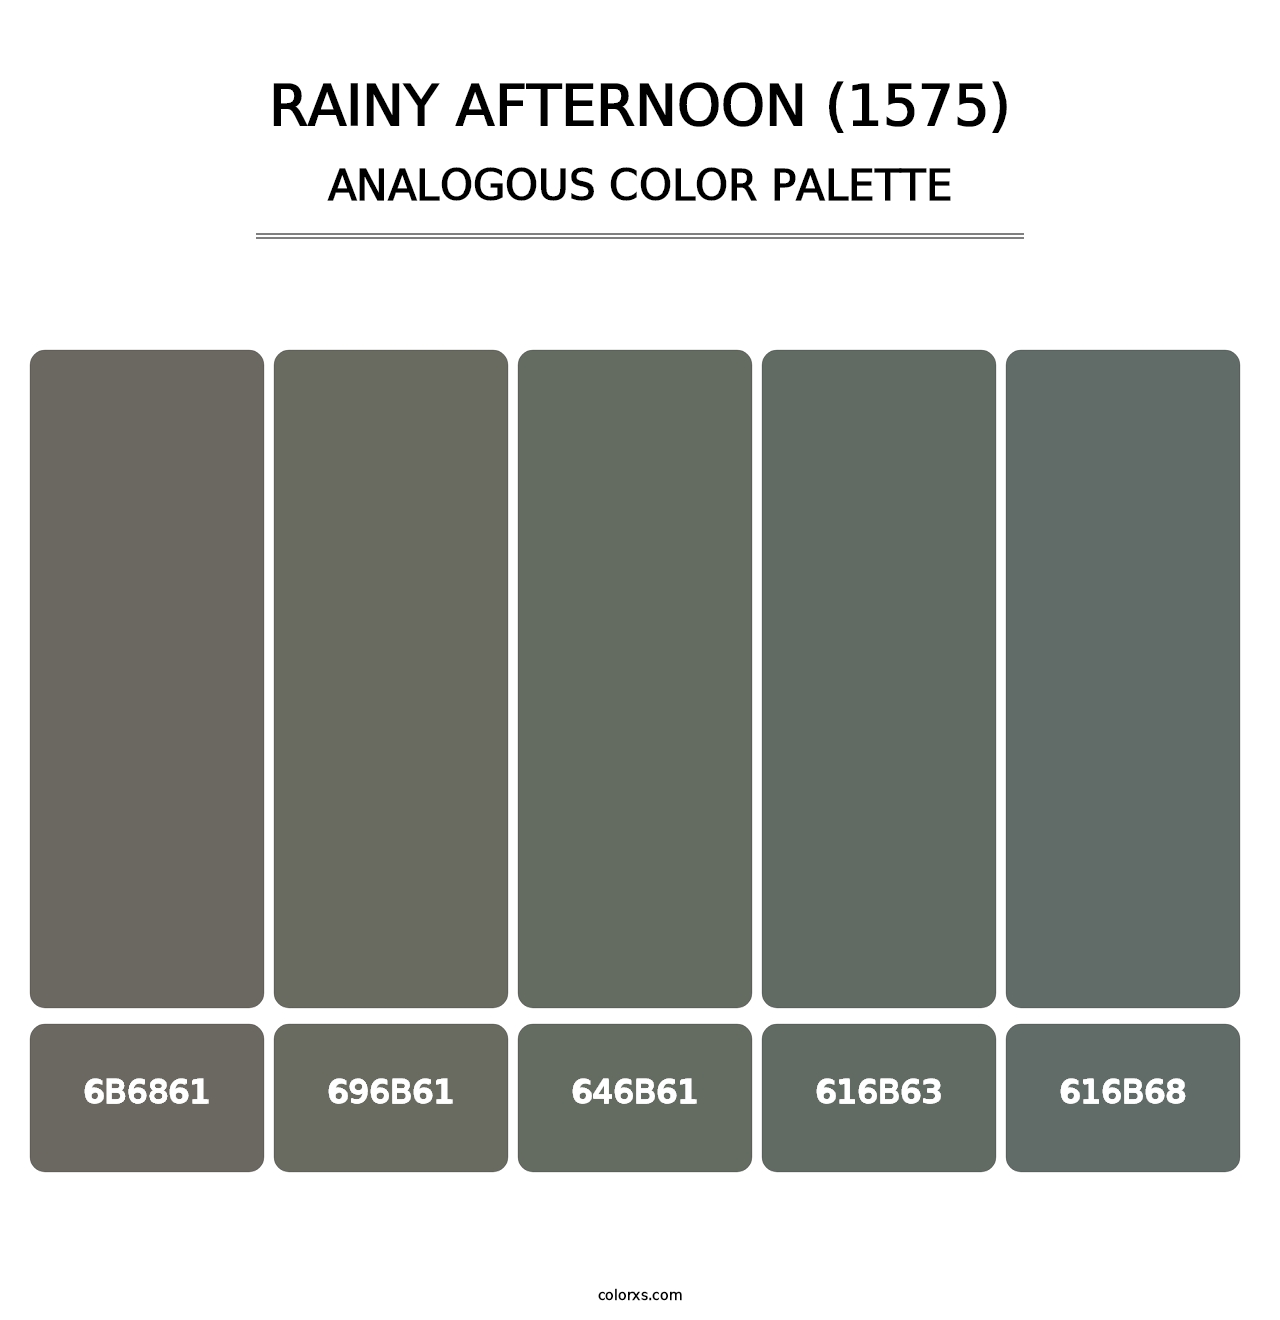 Rainy Afternoon (1575) - Analogous Color Palette